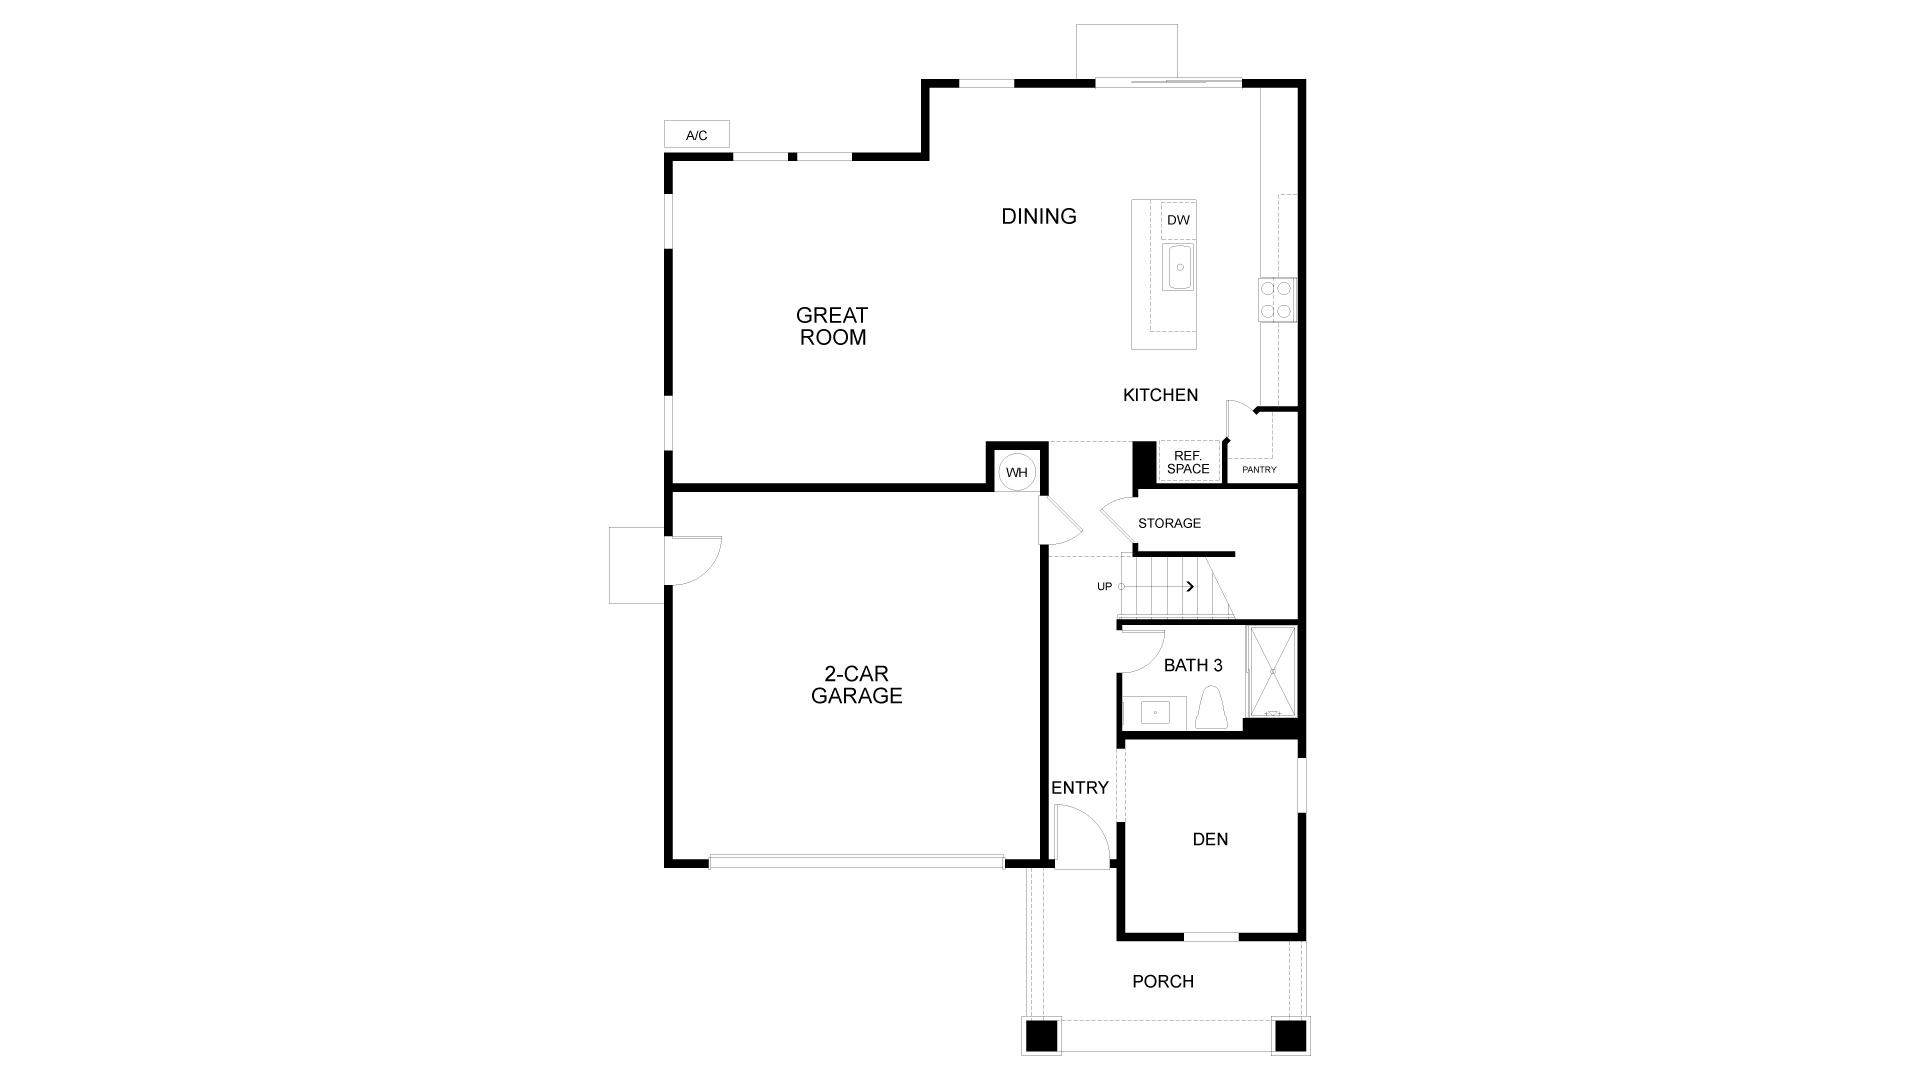 Residence 4 First Floor. 3br New Home in Petaluma, CA